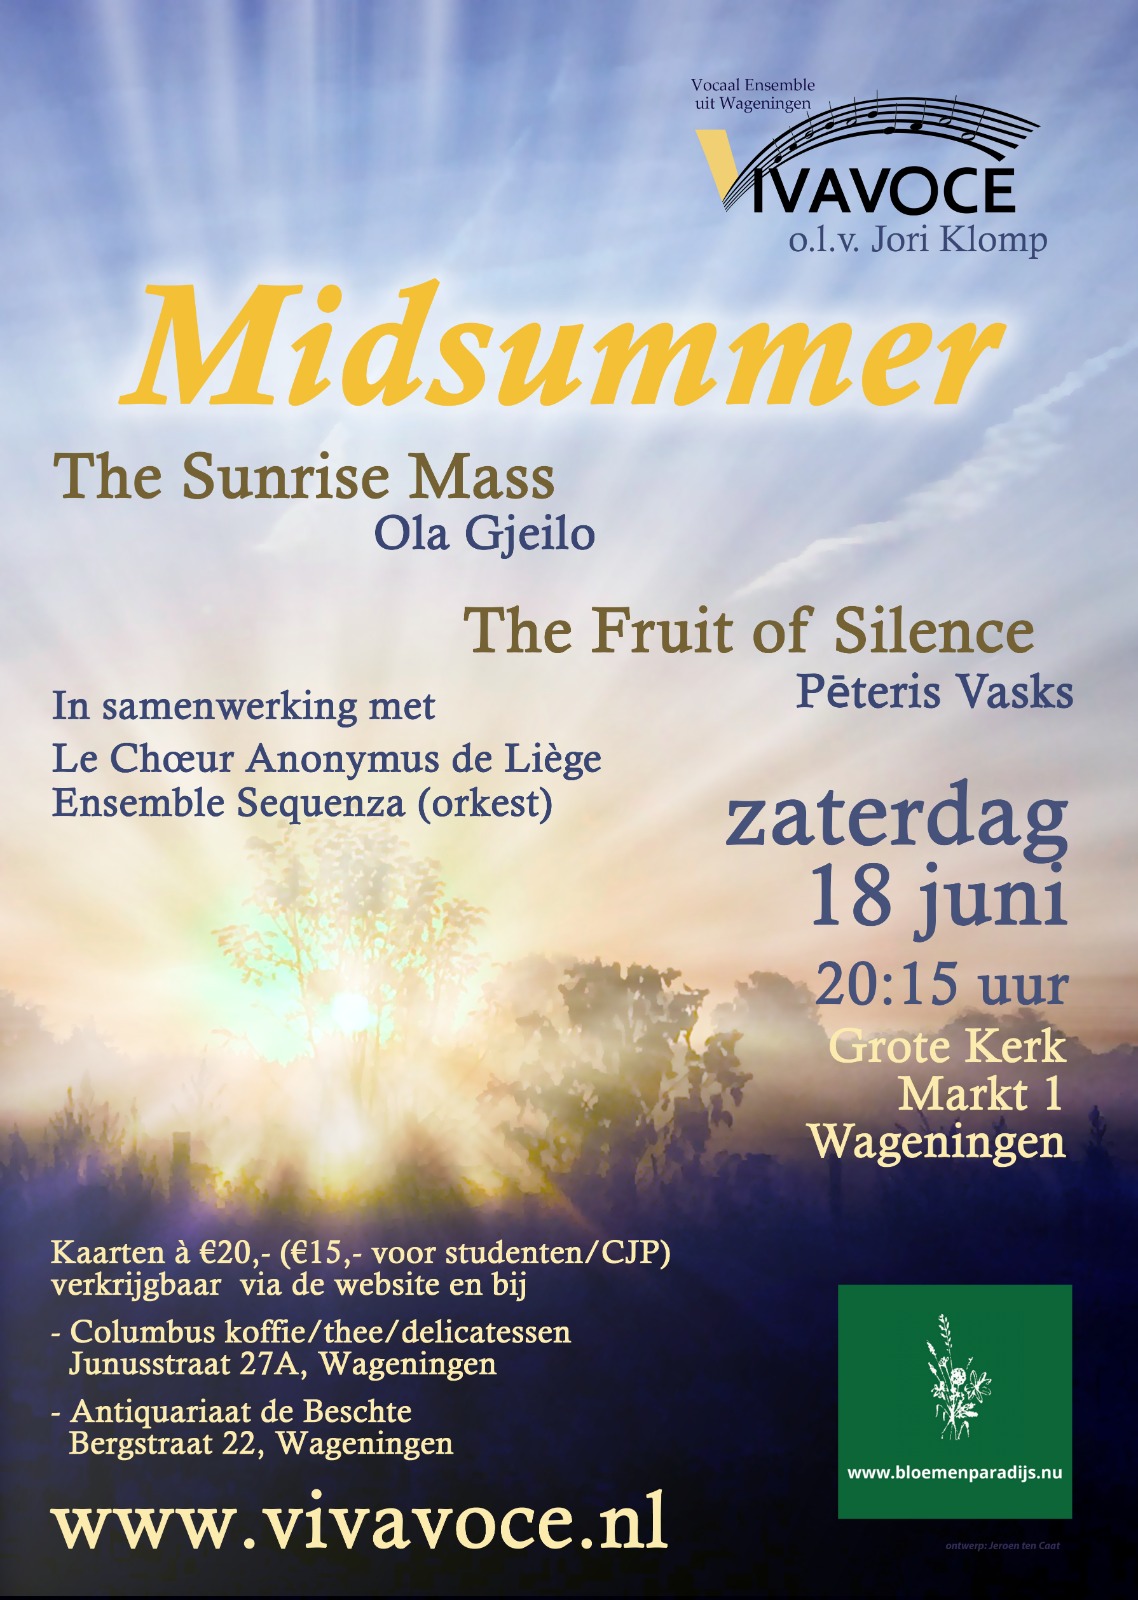 Midsummer concert - Vocaal Ensemble Vivavoce